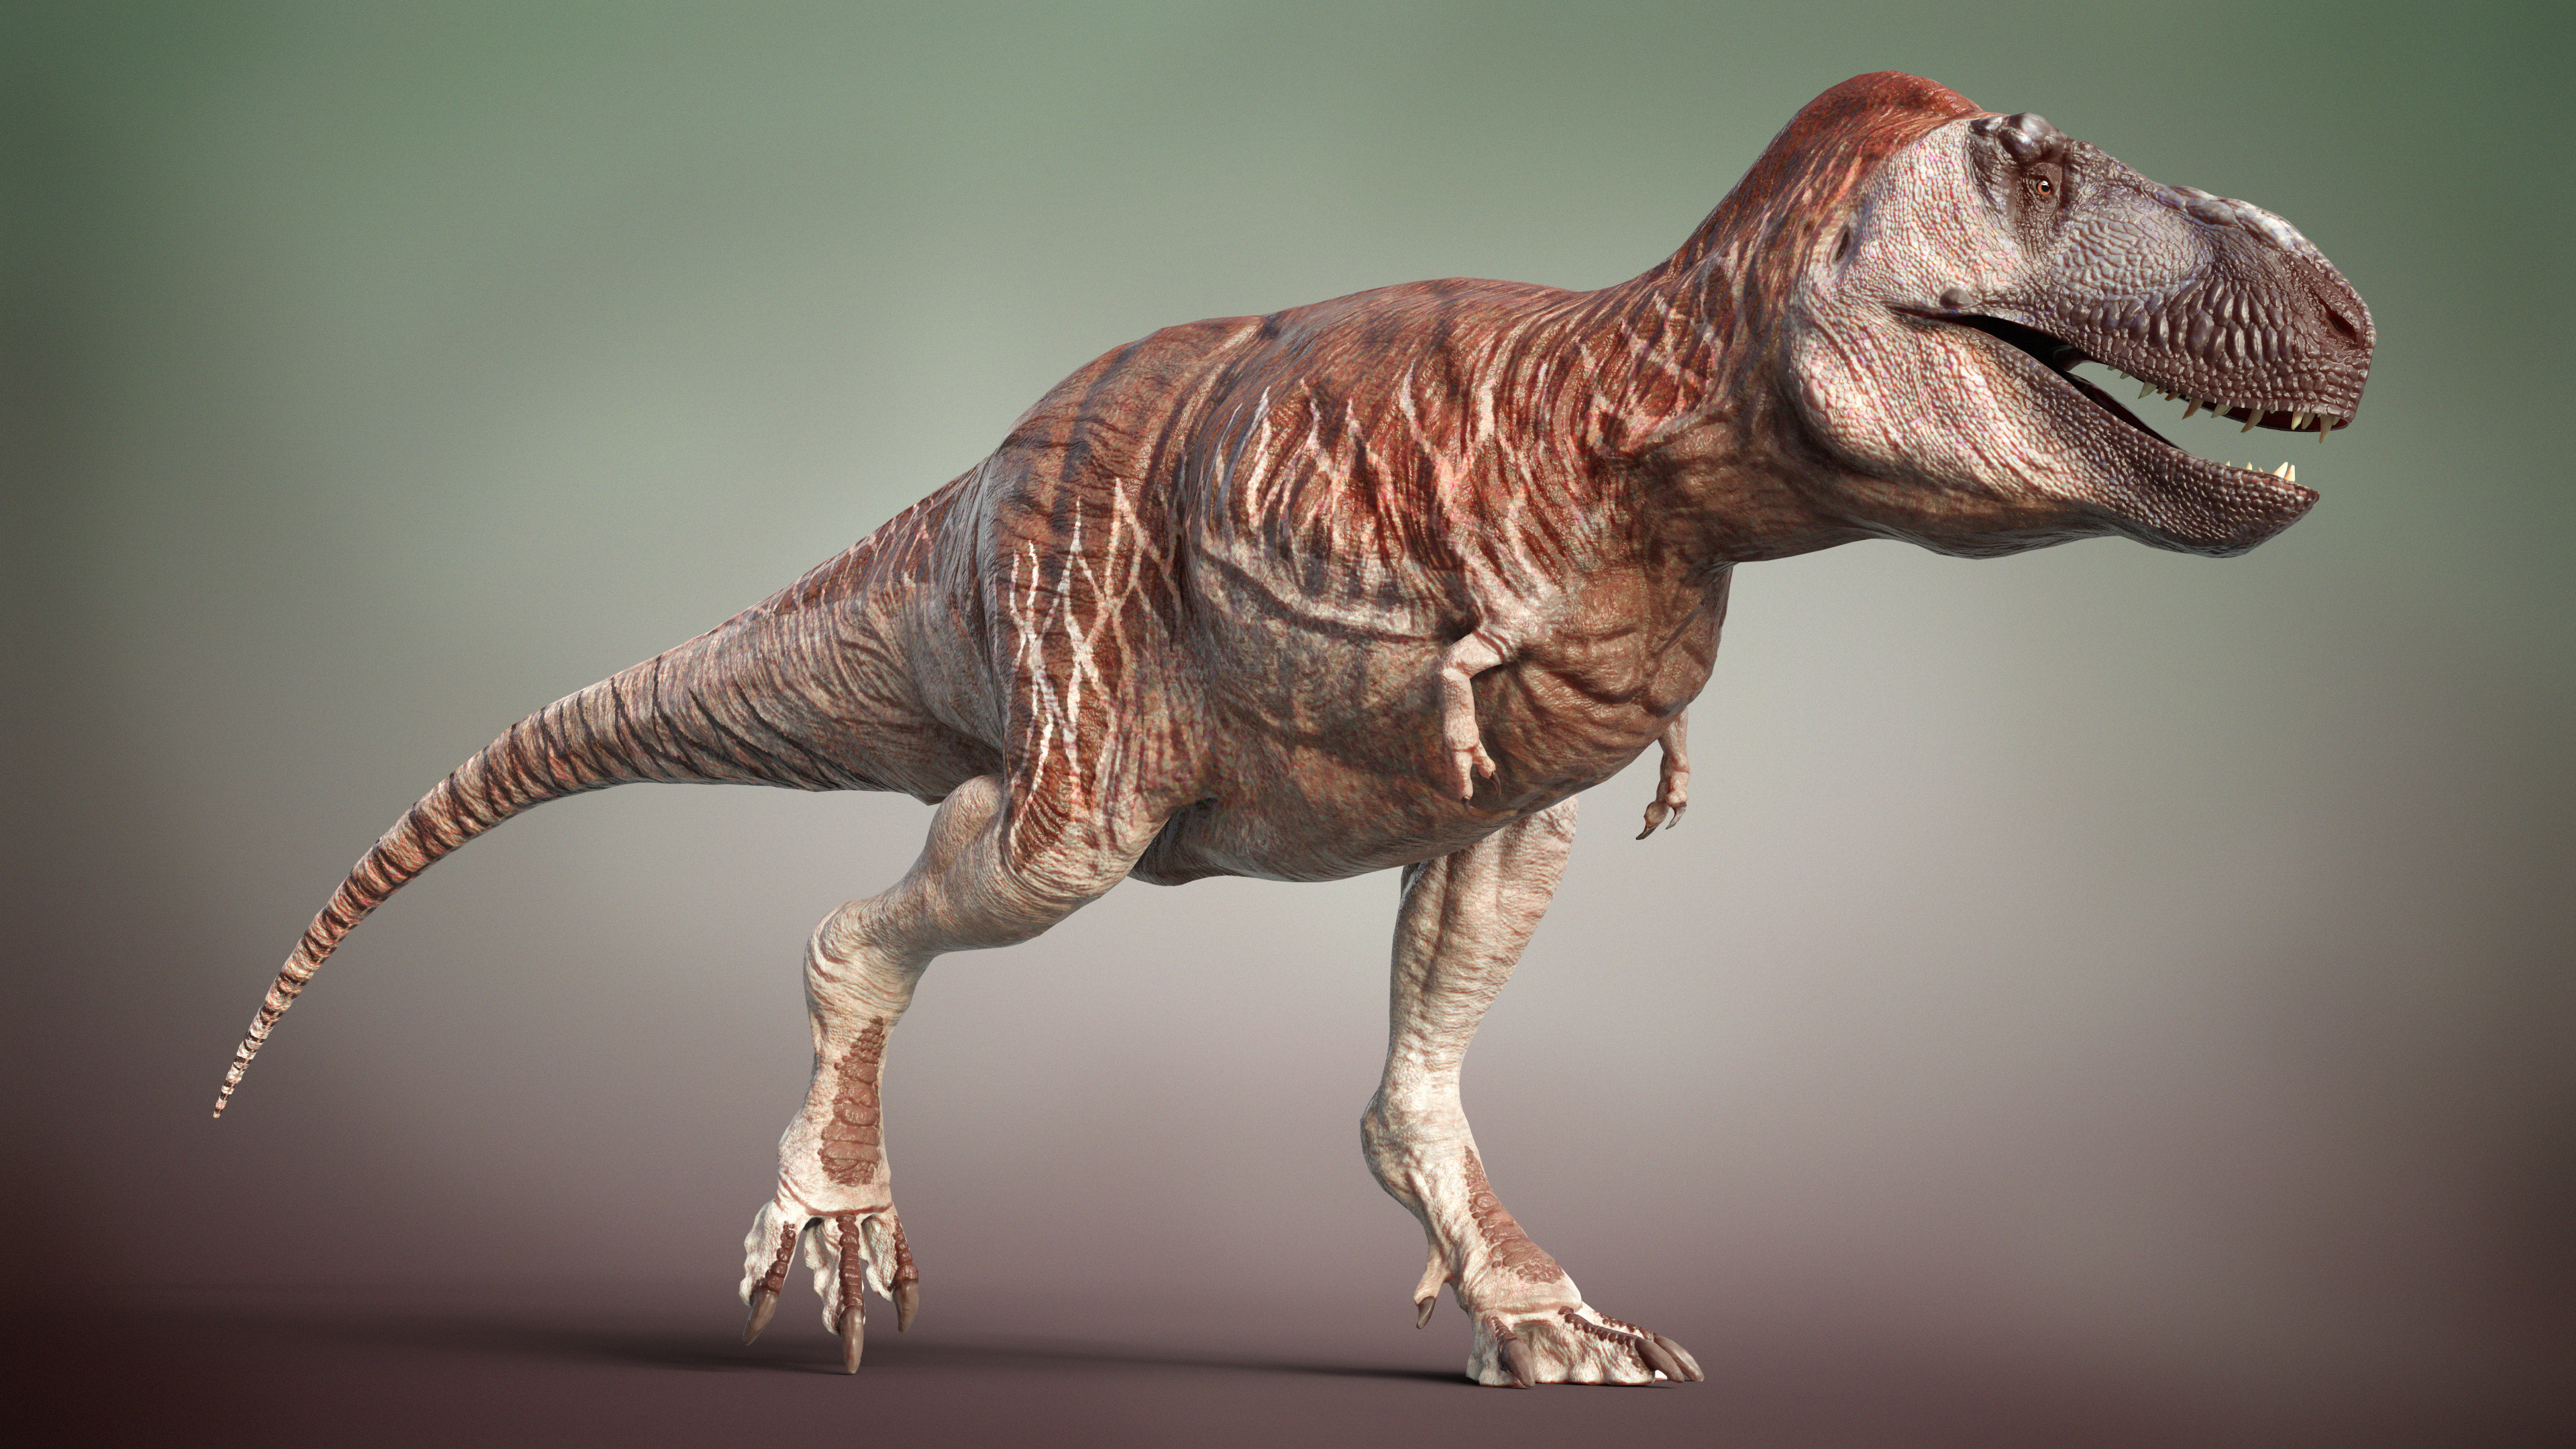 Tyrannosaurus rex Life Reconstruction - Projects - Blender Artists Community